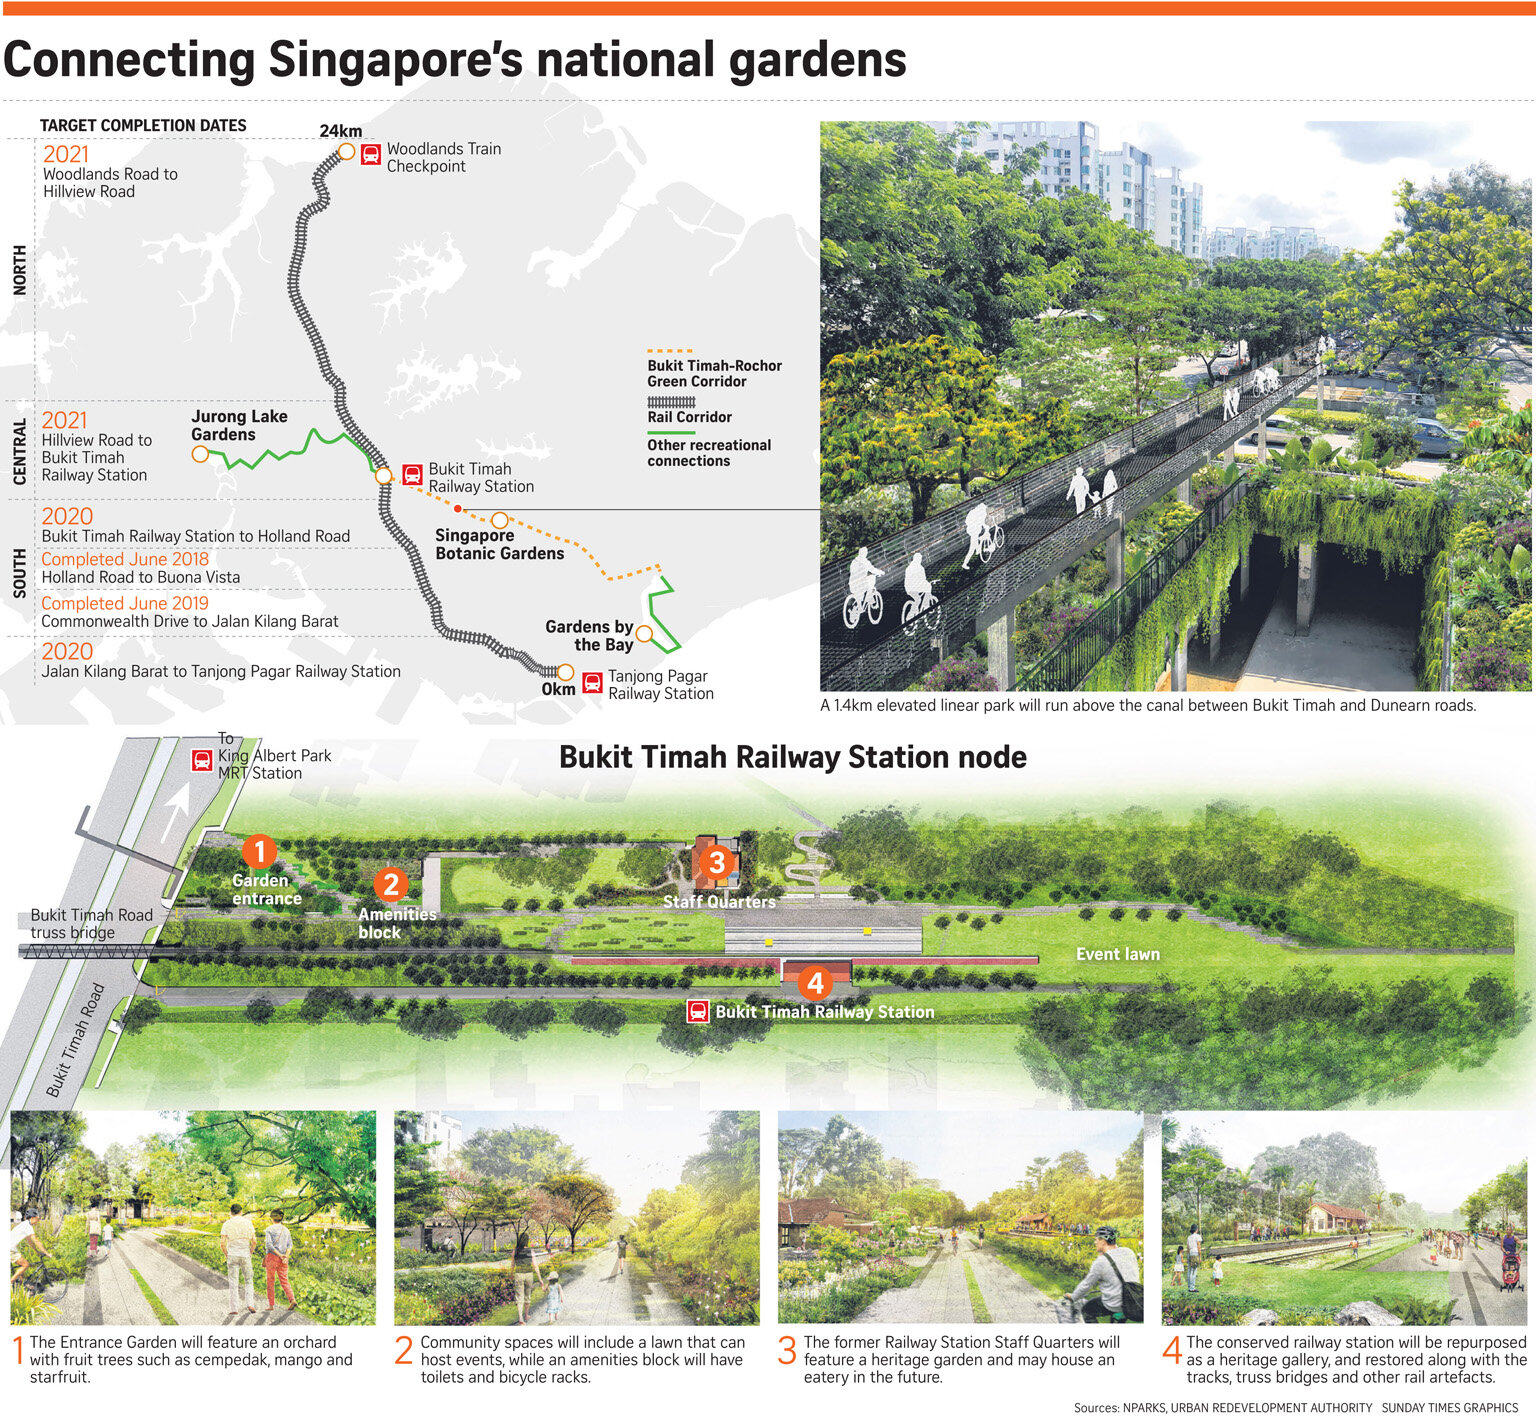 Bukit-Timah-Rochor-Green-Corridor-link-Jurong-Lake-Gardens-Singapore-Botanic-Gardens-Gardens-by-the-Bay-ST-photo.jpg